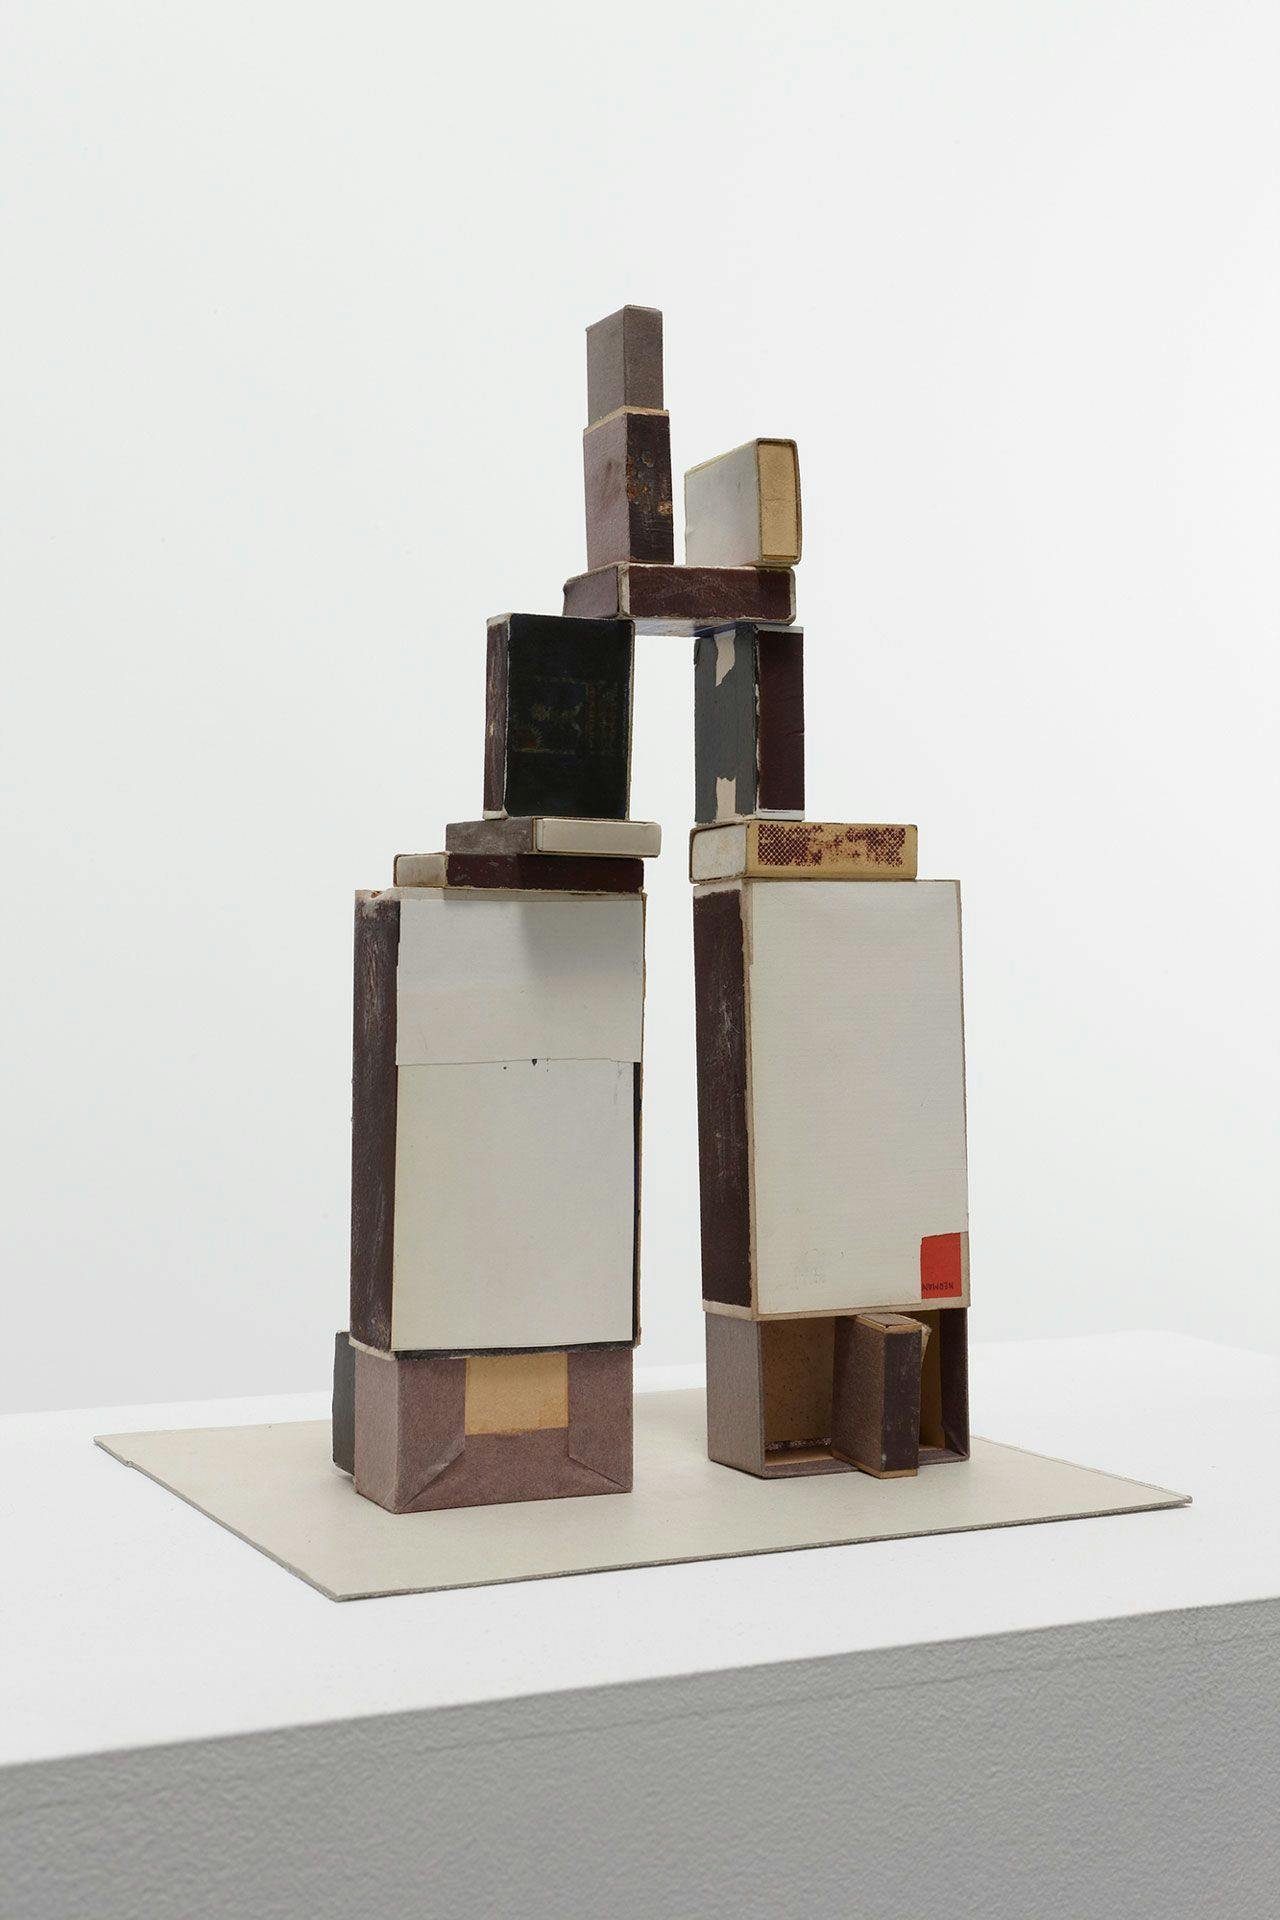 A sculpture by Jockum Nordstr√∂m, titled WOR, dated 2009.